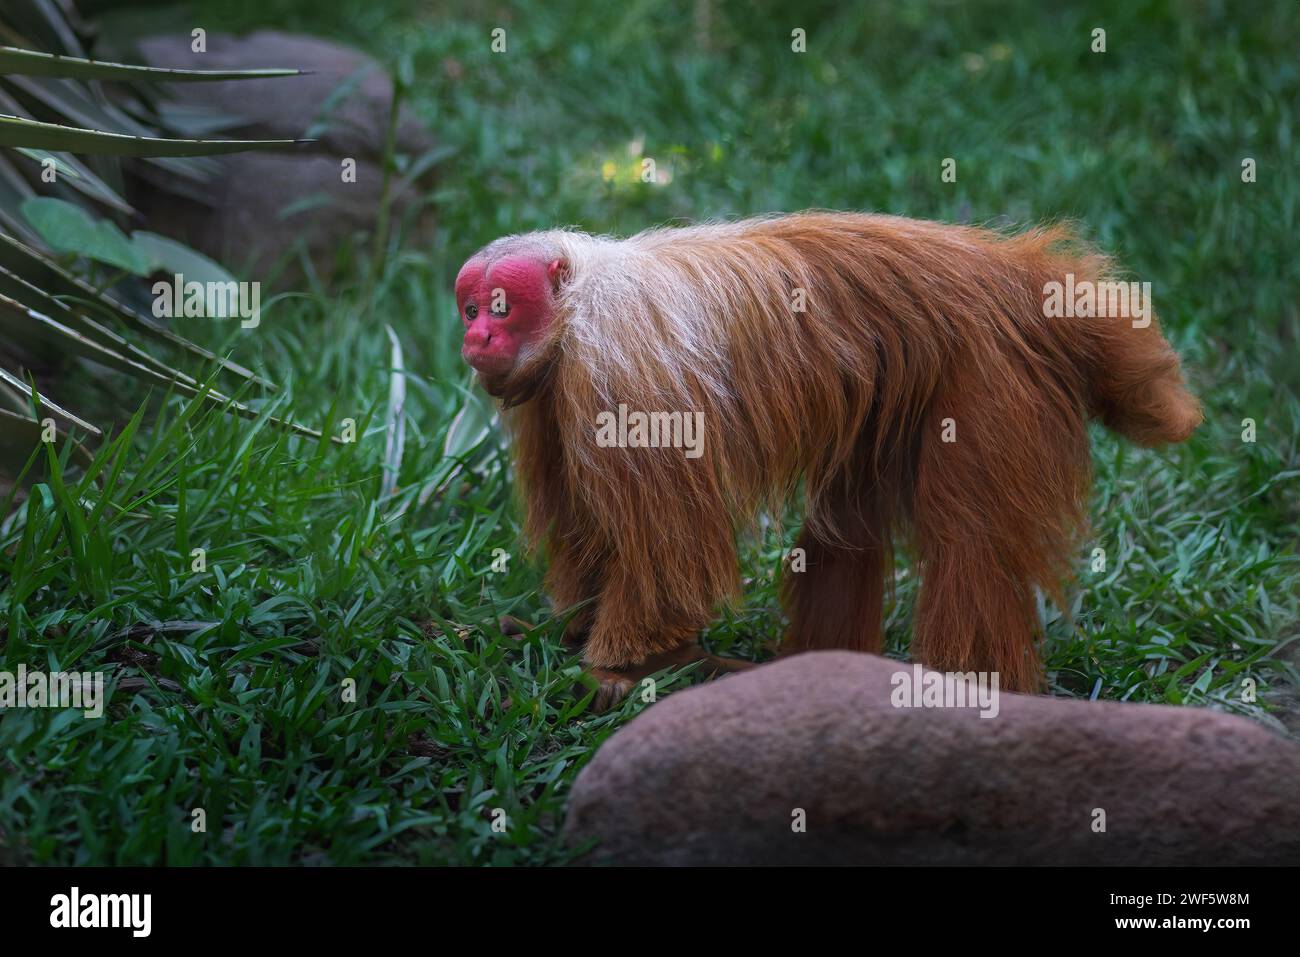 Red Uakari Monkey (Cacajao calvus rubicundus) Stock Photo